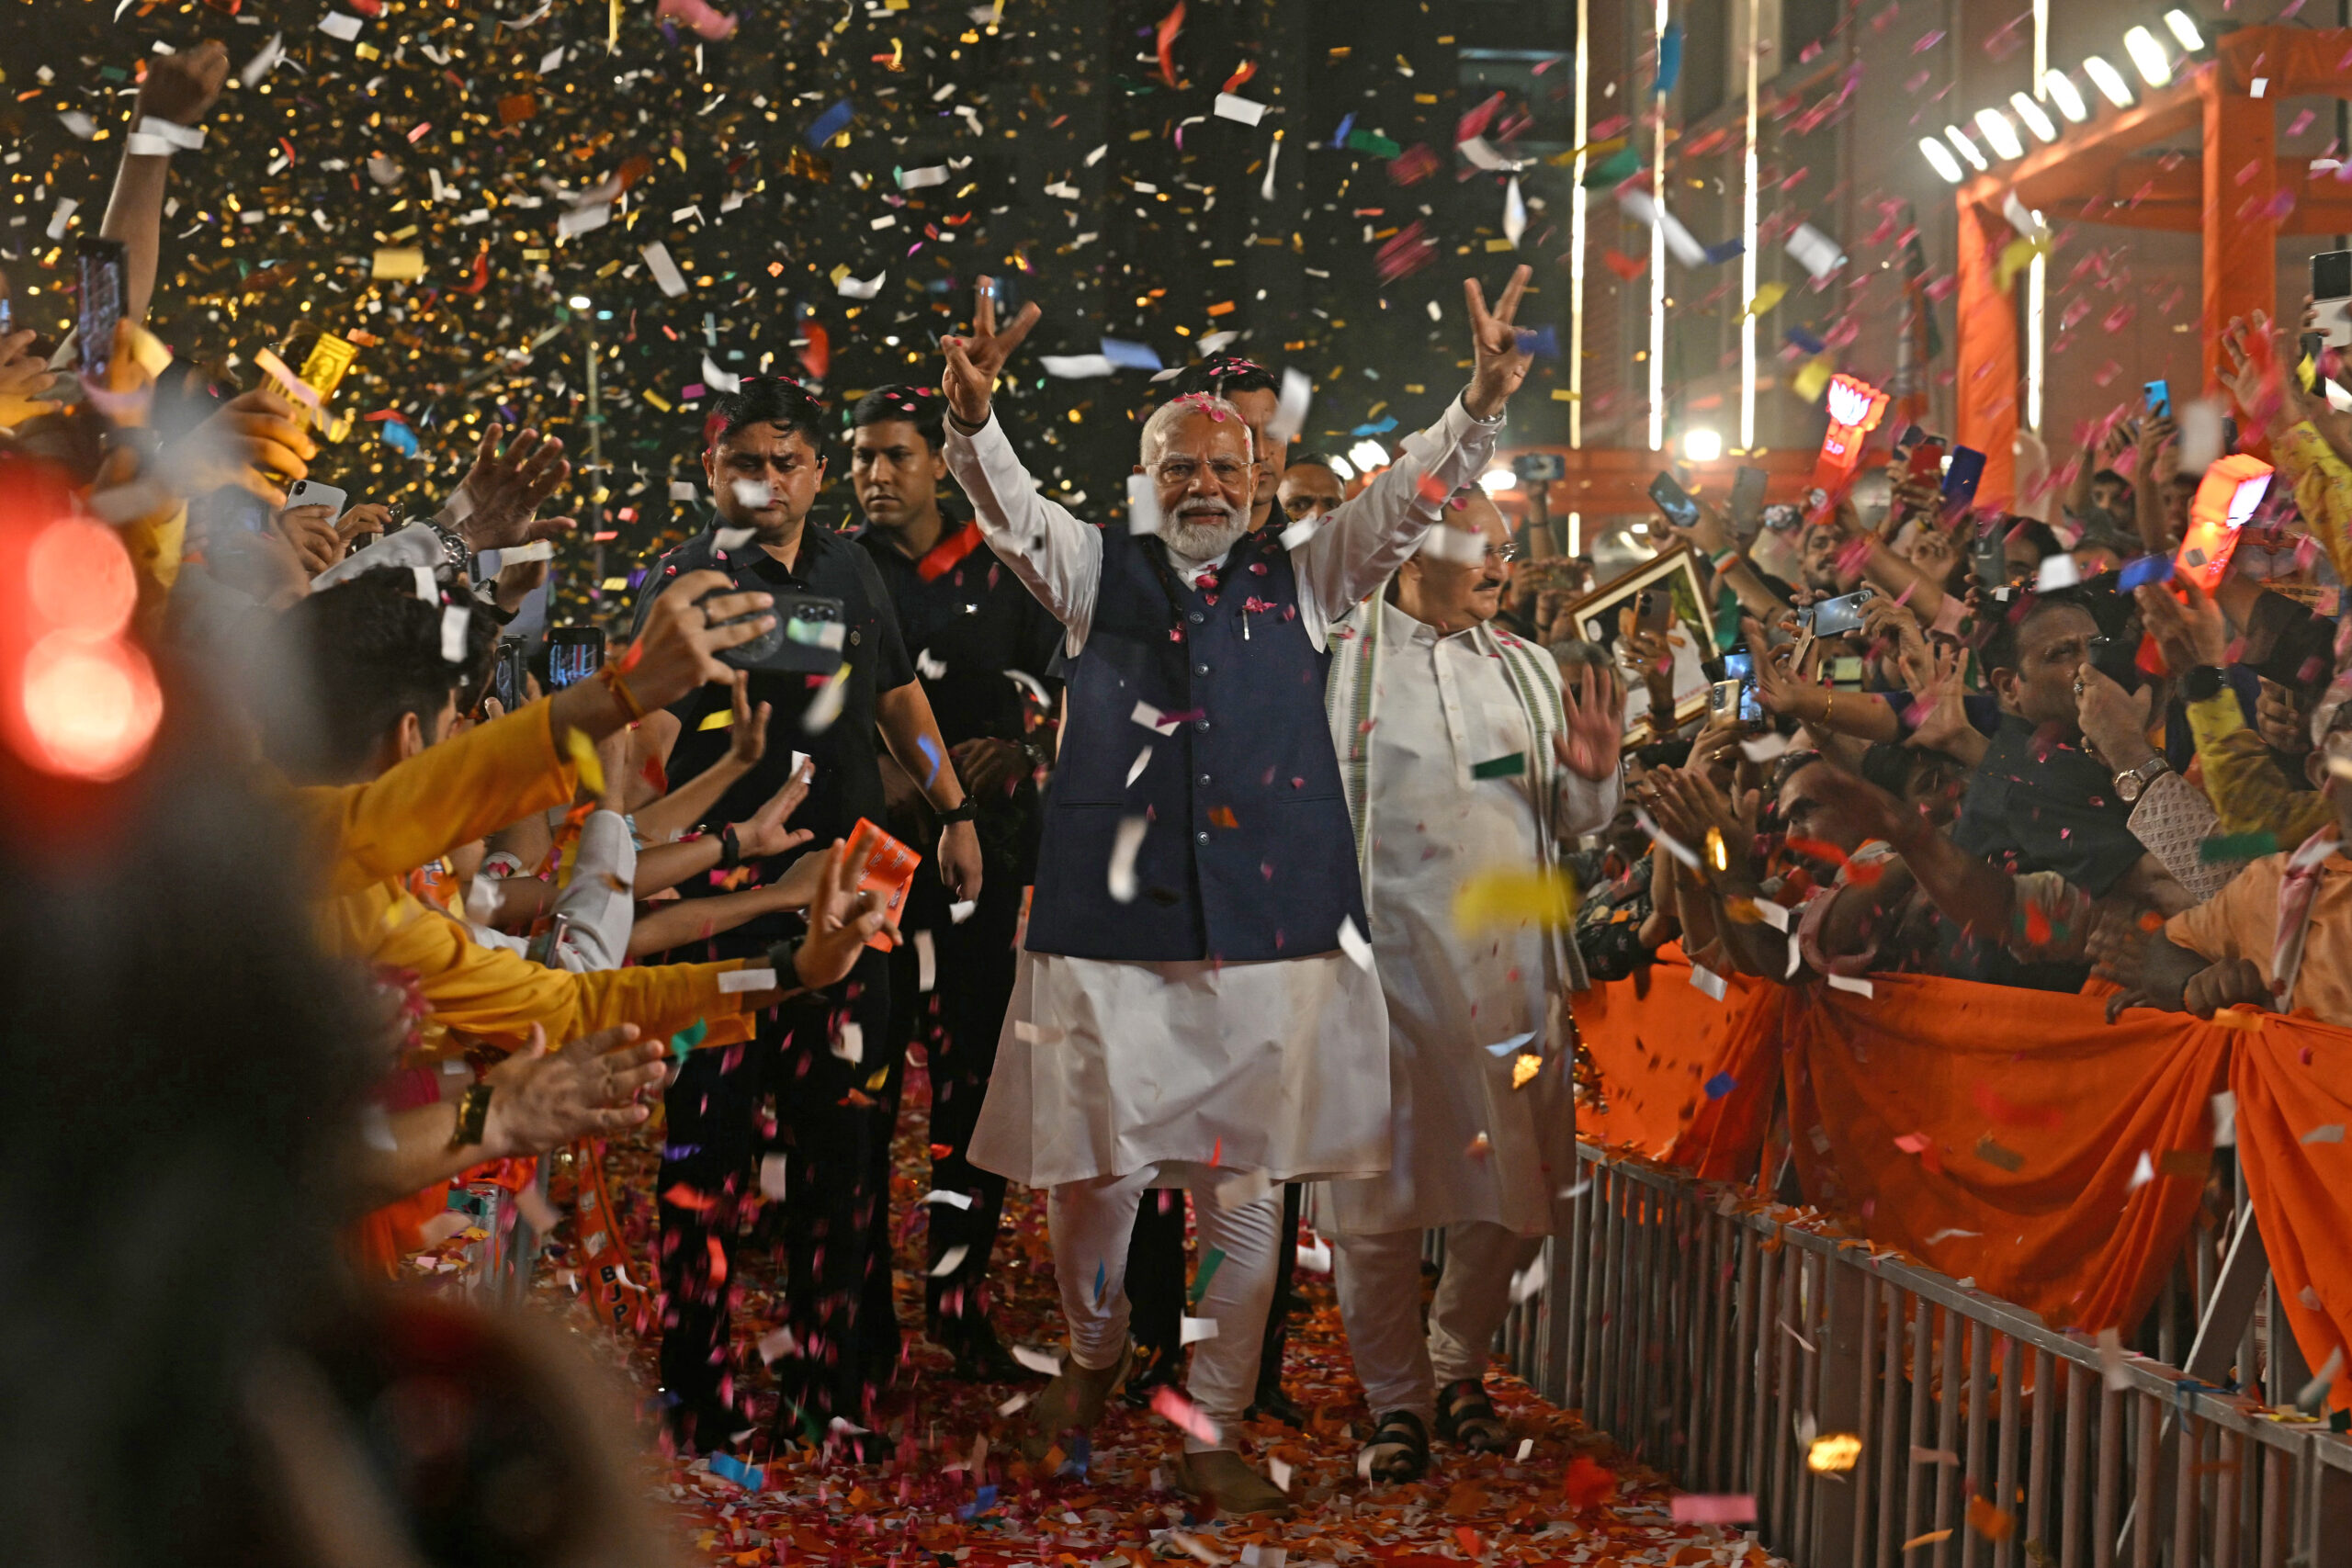 Modi celebrates victory in India vote, but falls short of landslide